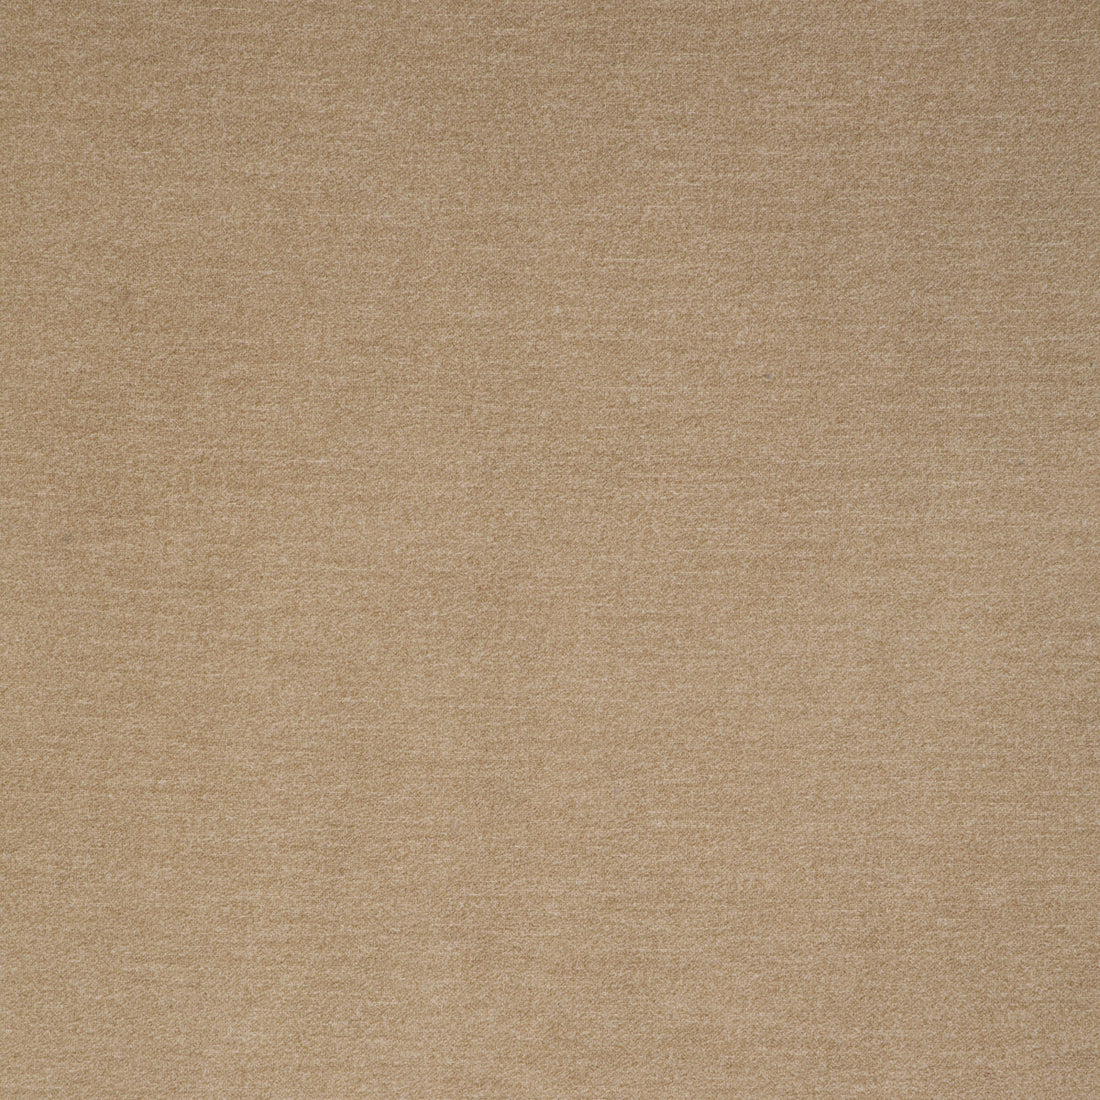 Kravet Smart fabric in 37000-116 color - pattern 37000.116.0 - by Kravet Smart in the Performance Kravetarmor collection